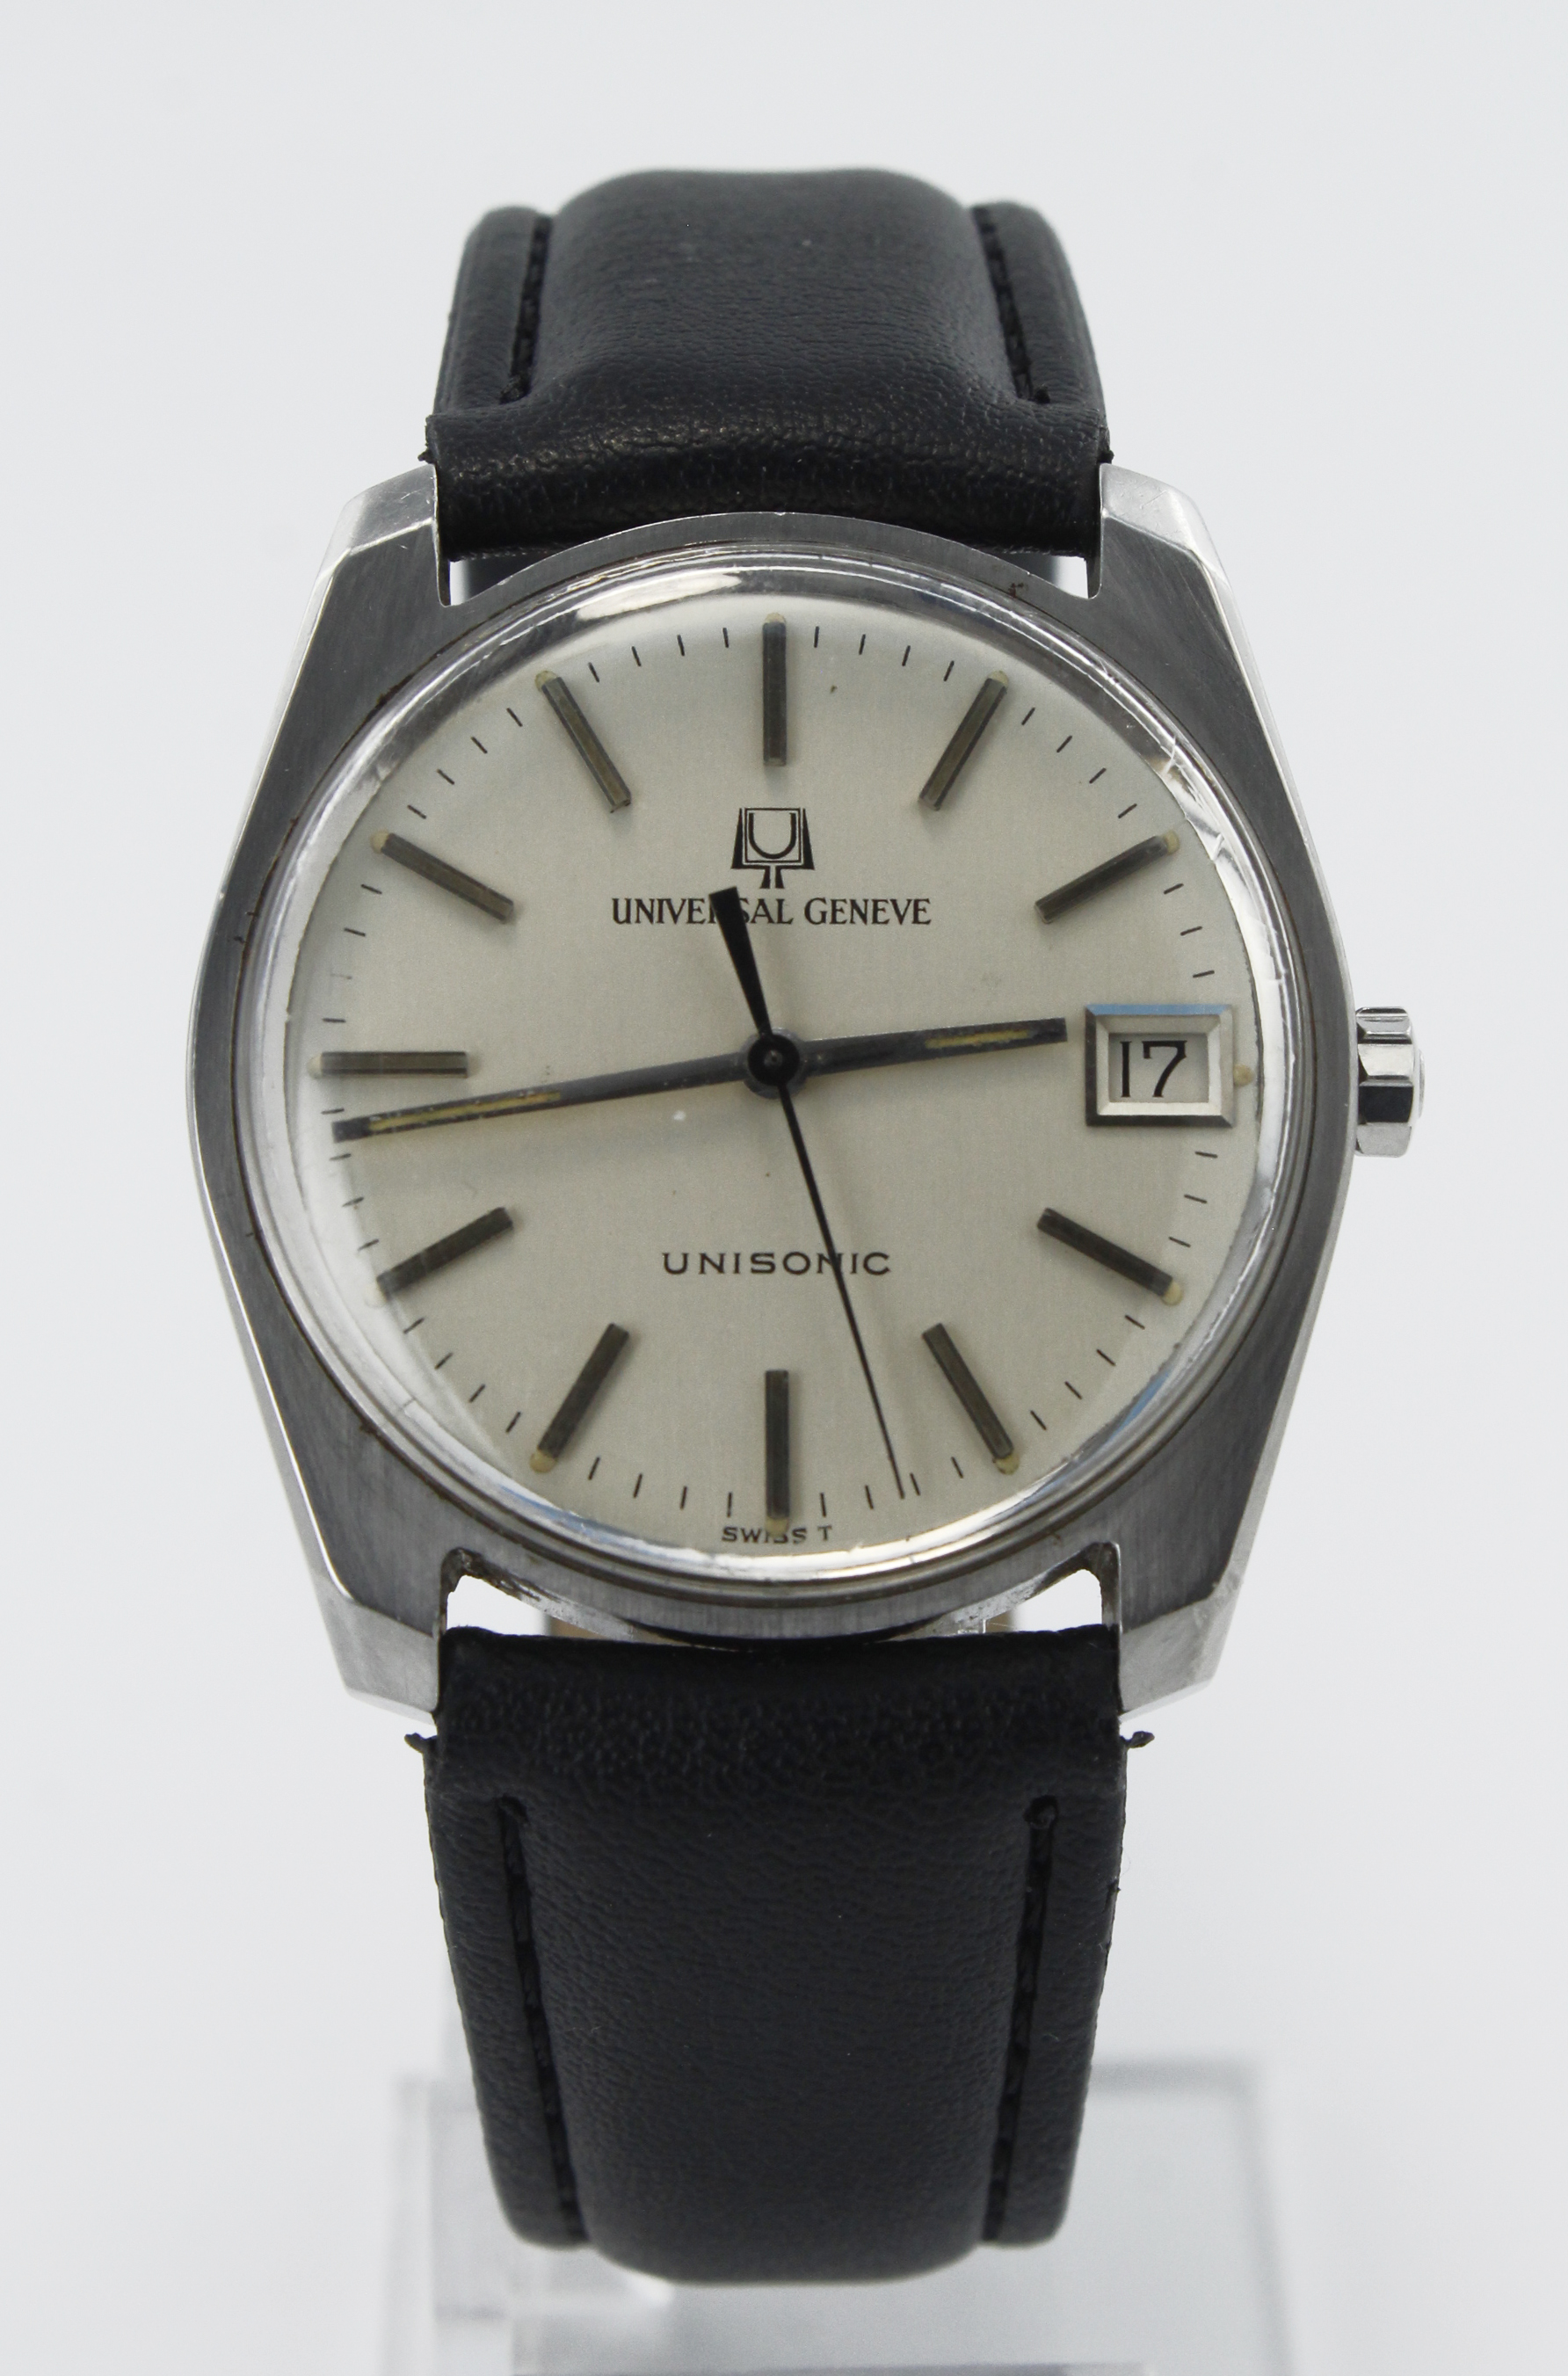 Gents stainless steel cased Universal Geneve Unisonic quartz wristwatch, ref. 852100, circa 1980s.